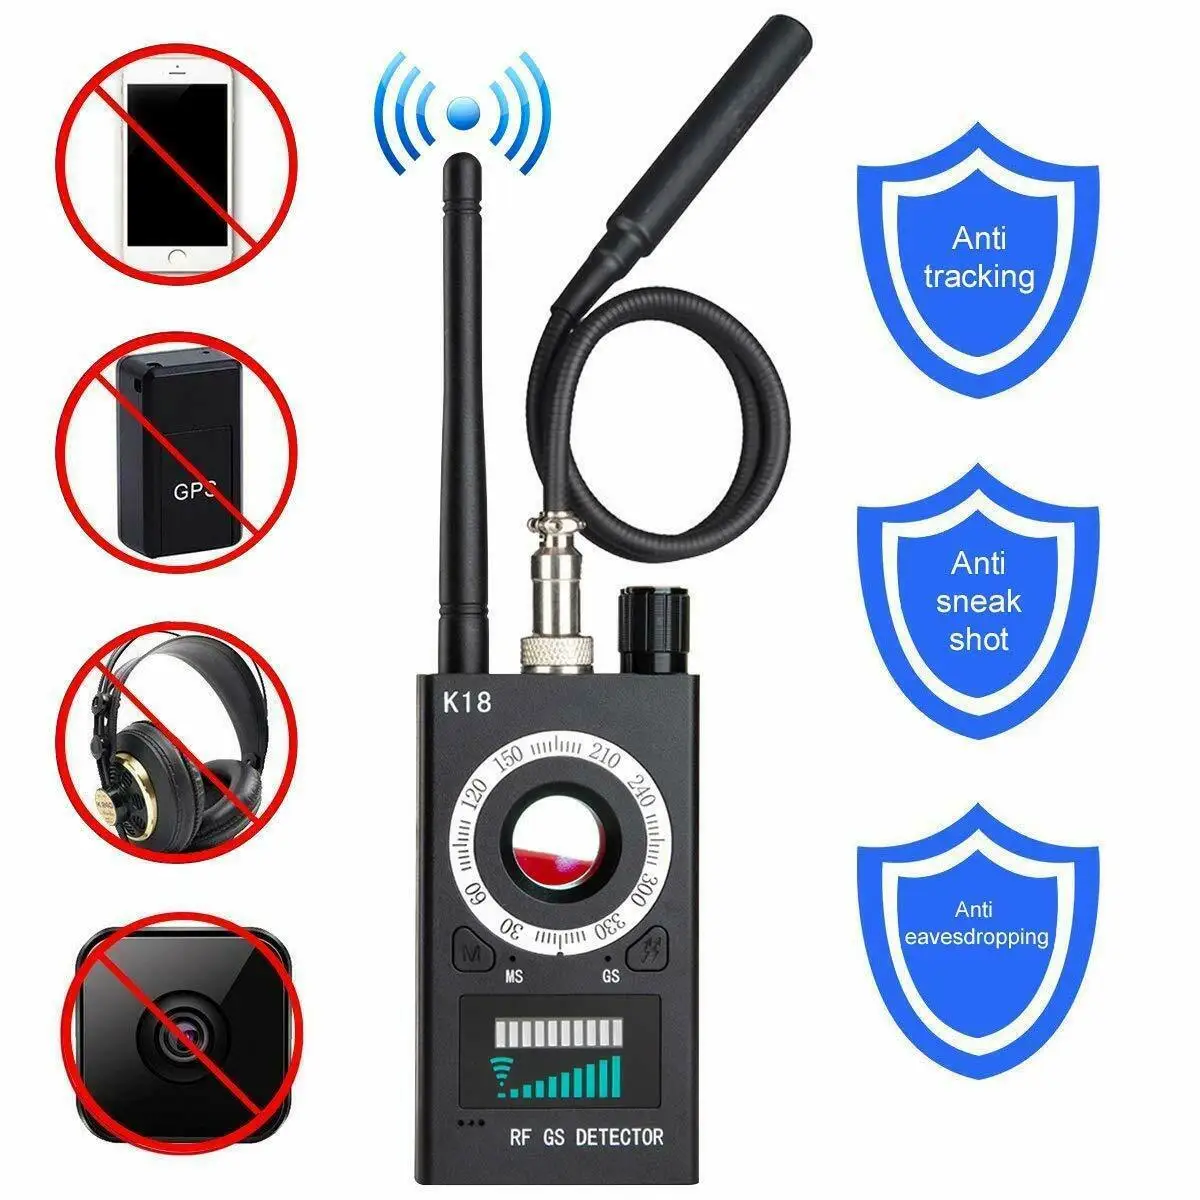 

1MHZ-6.5GHZ K18 Wireless RF Signal Detector Anti-spy Camera Detects GSM Audio GPS Anti-sneak Shot Monitoring Positioning Scanner